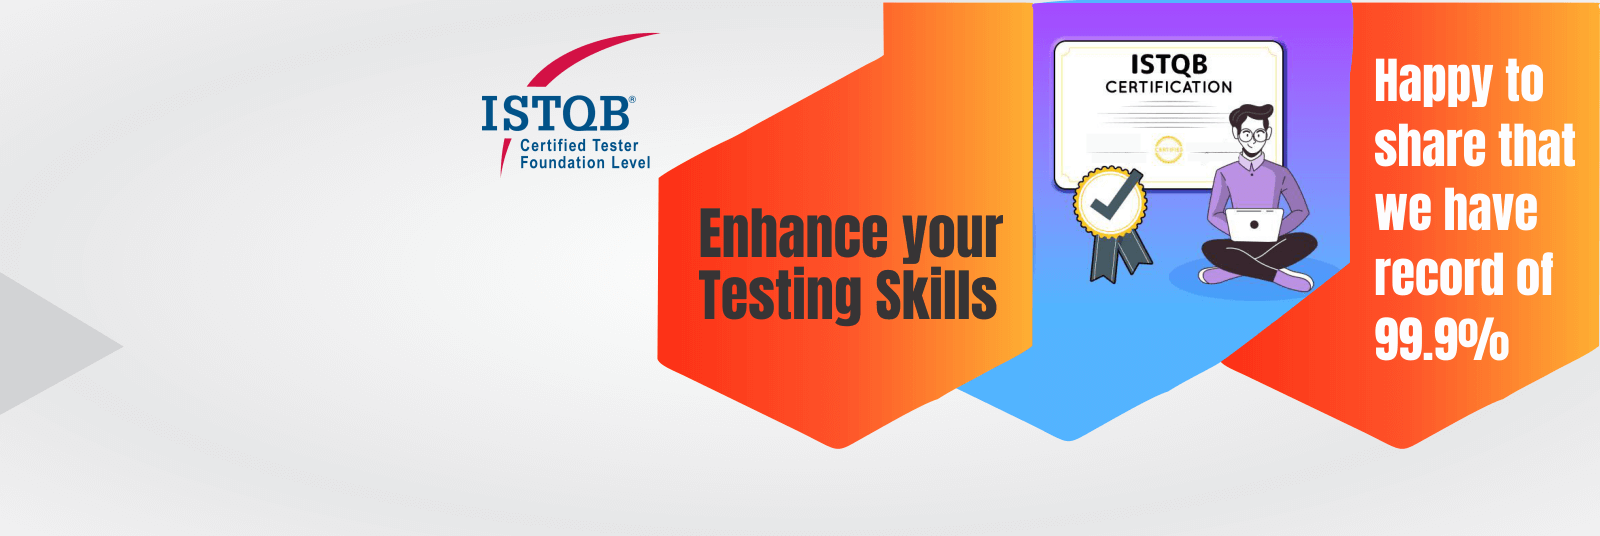 istqb-certification-training and exam